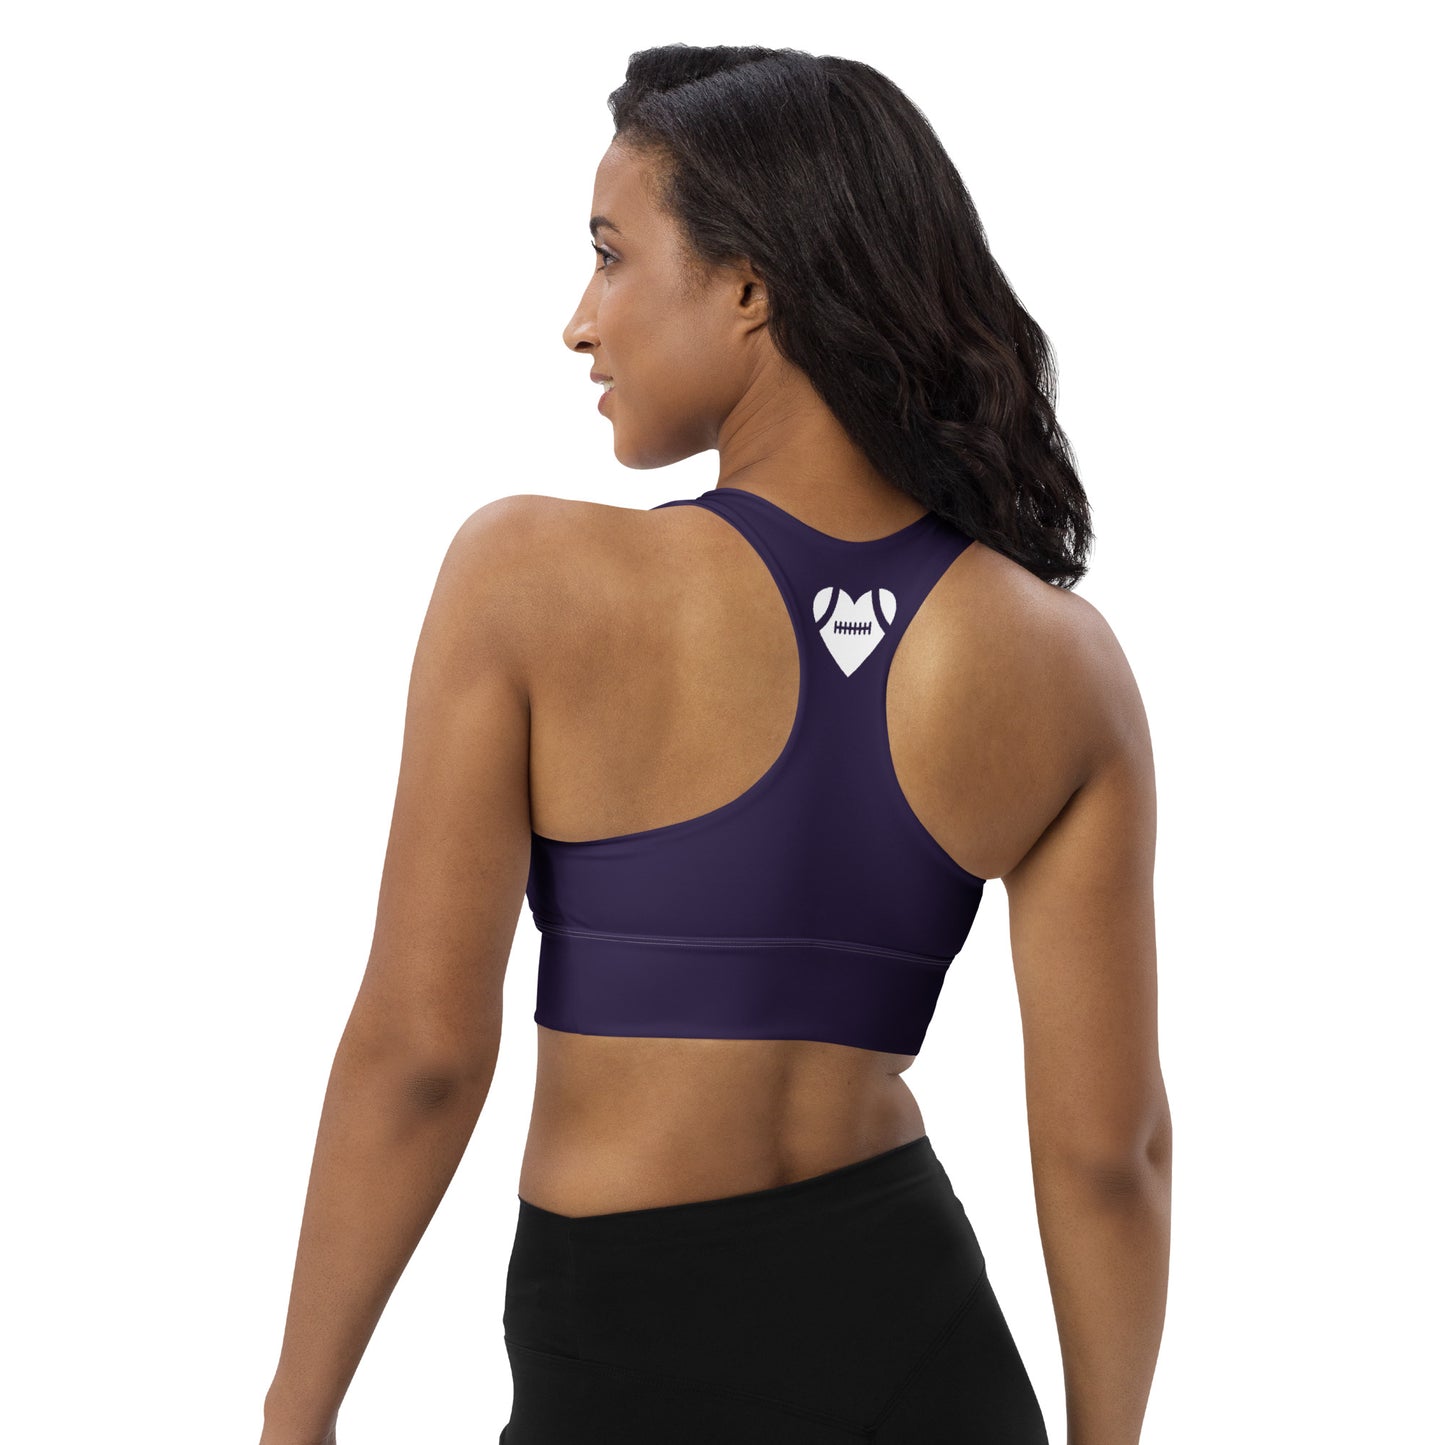 AFA Basics Solid Tolopea Longline sports bra